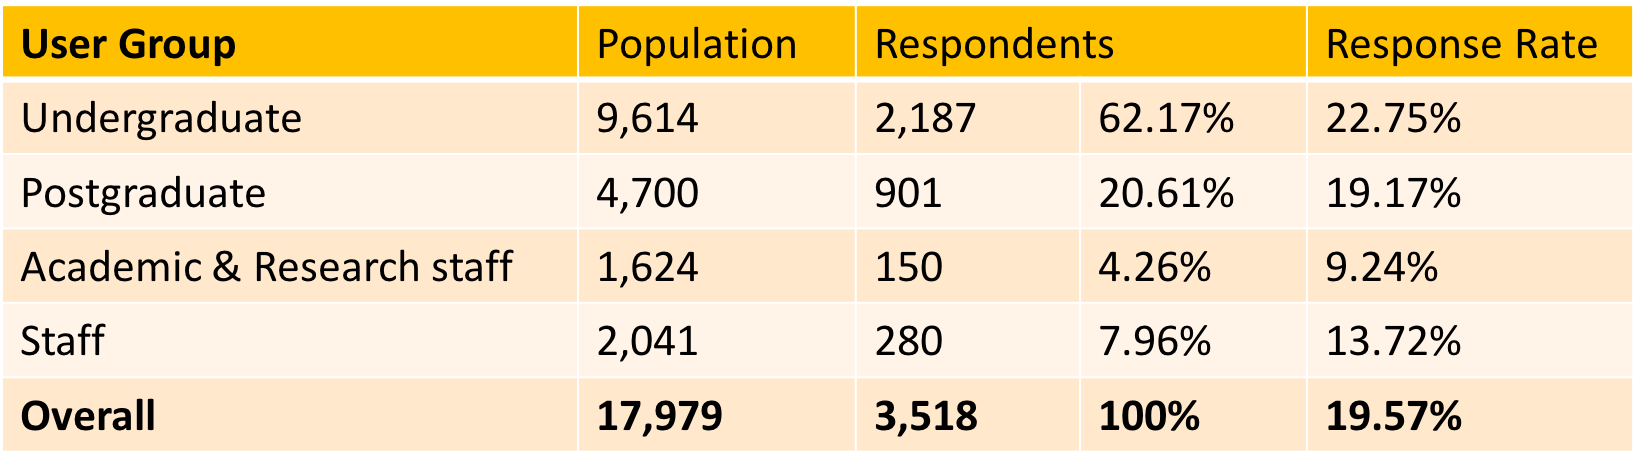 libqual-response-rates-2019